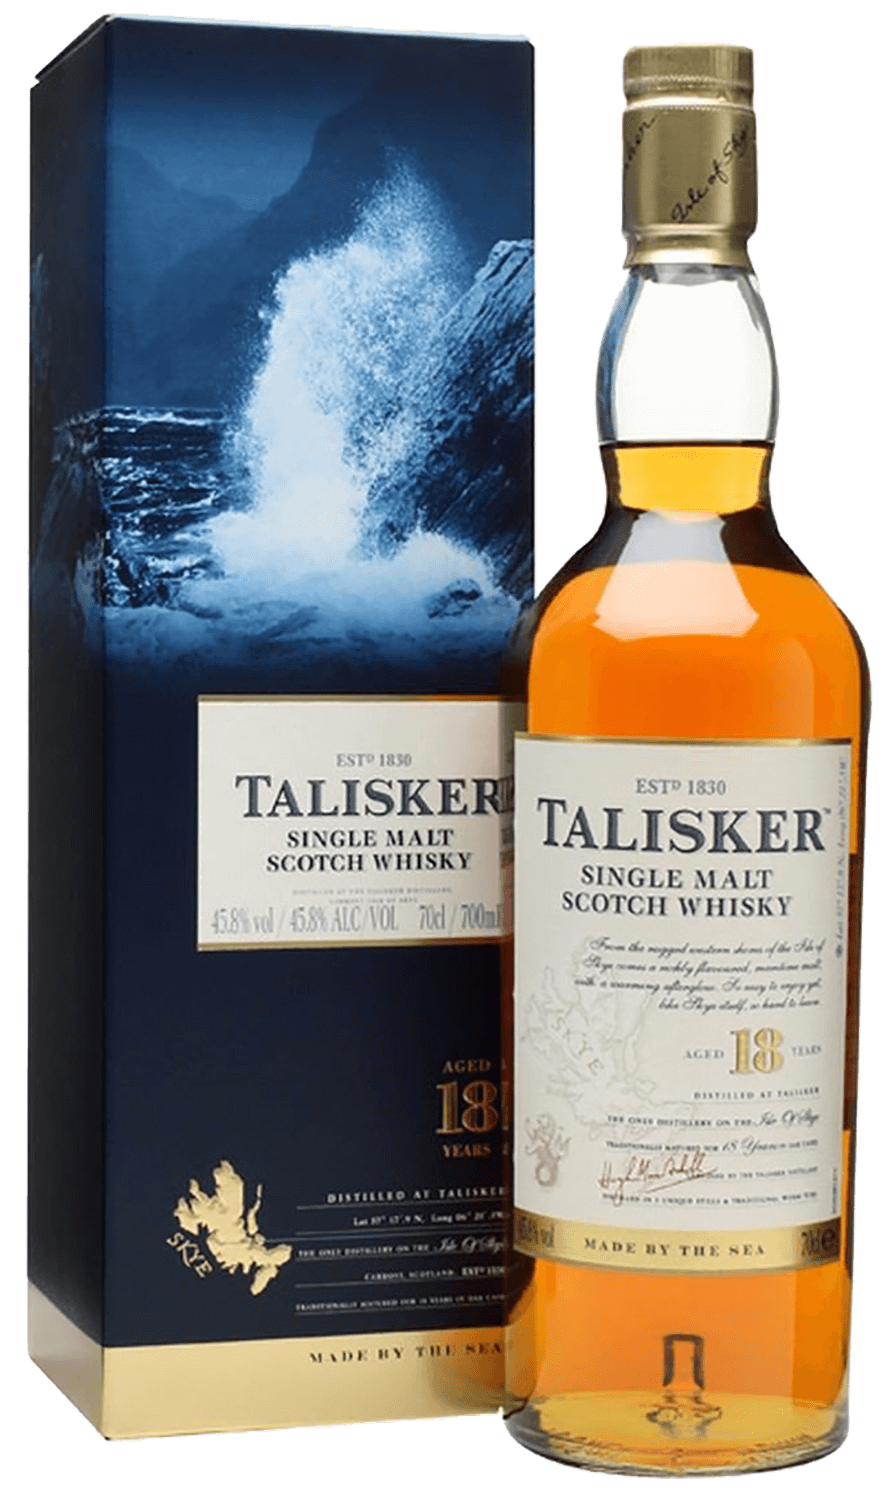 Talisker 18 Years Old Single Malt Scotch Whisky (gift box) aberfeldy 21 years old highland single malt scotch whisky gift box